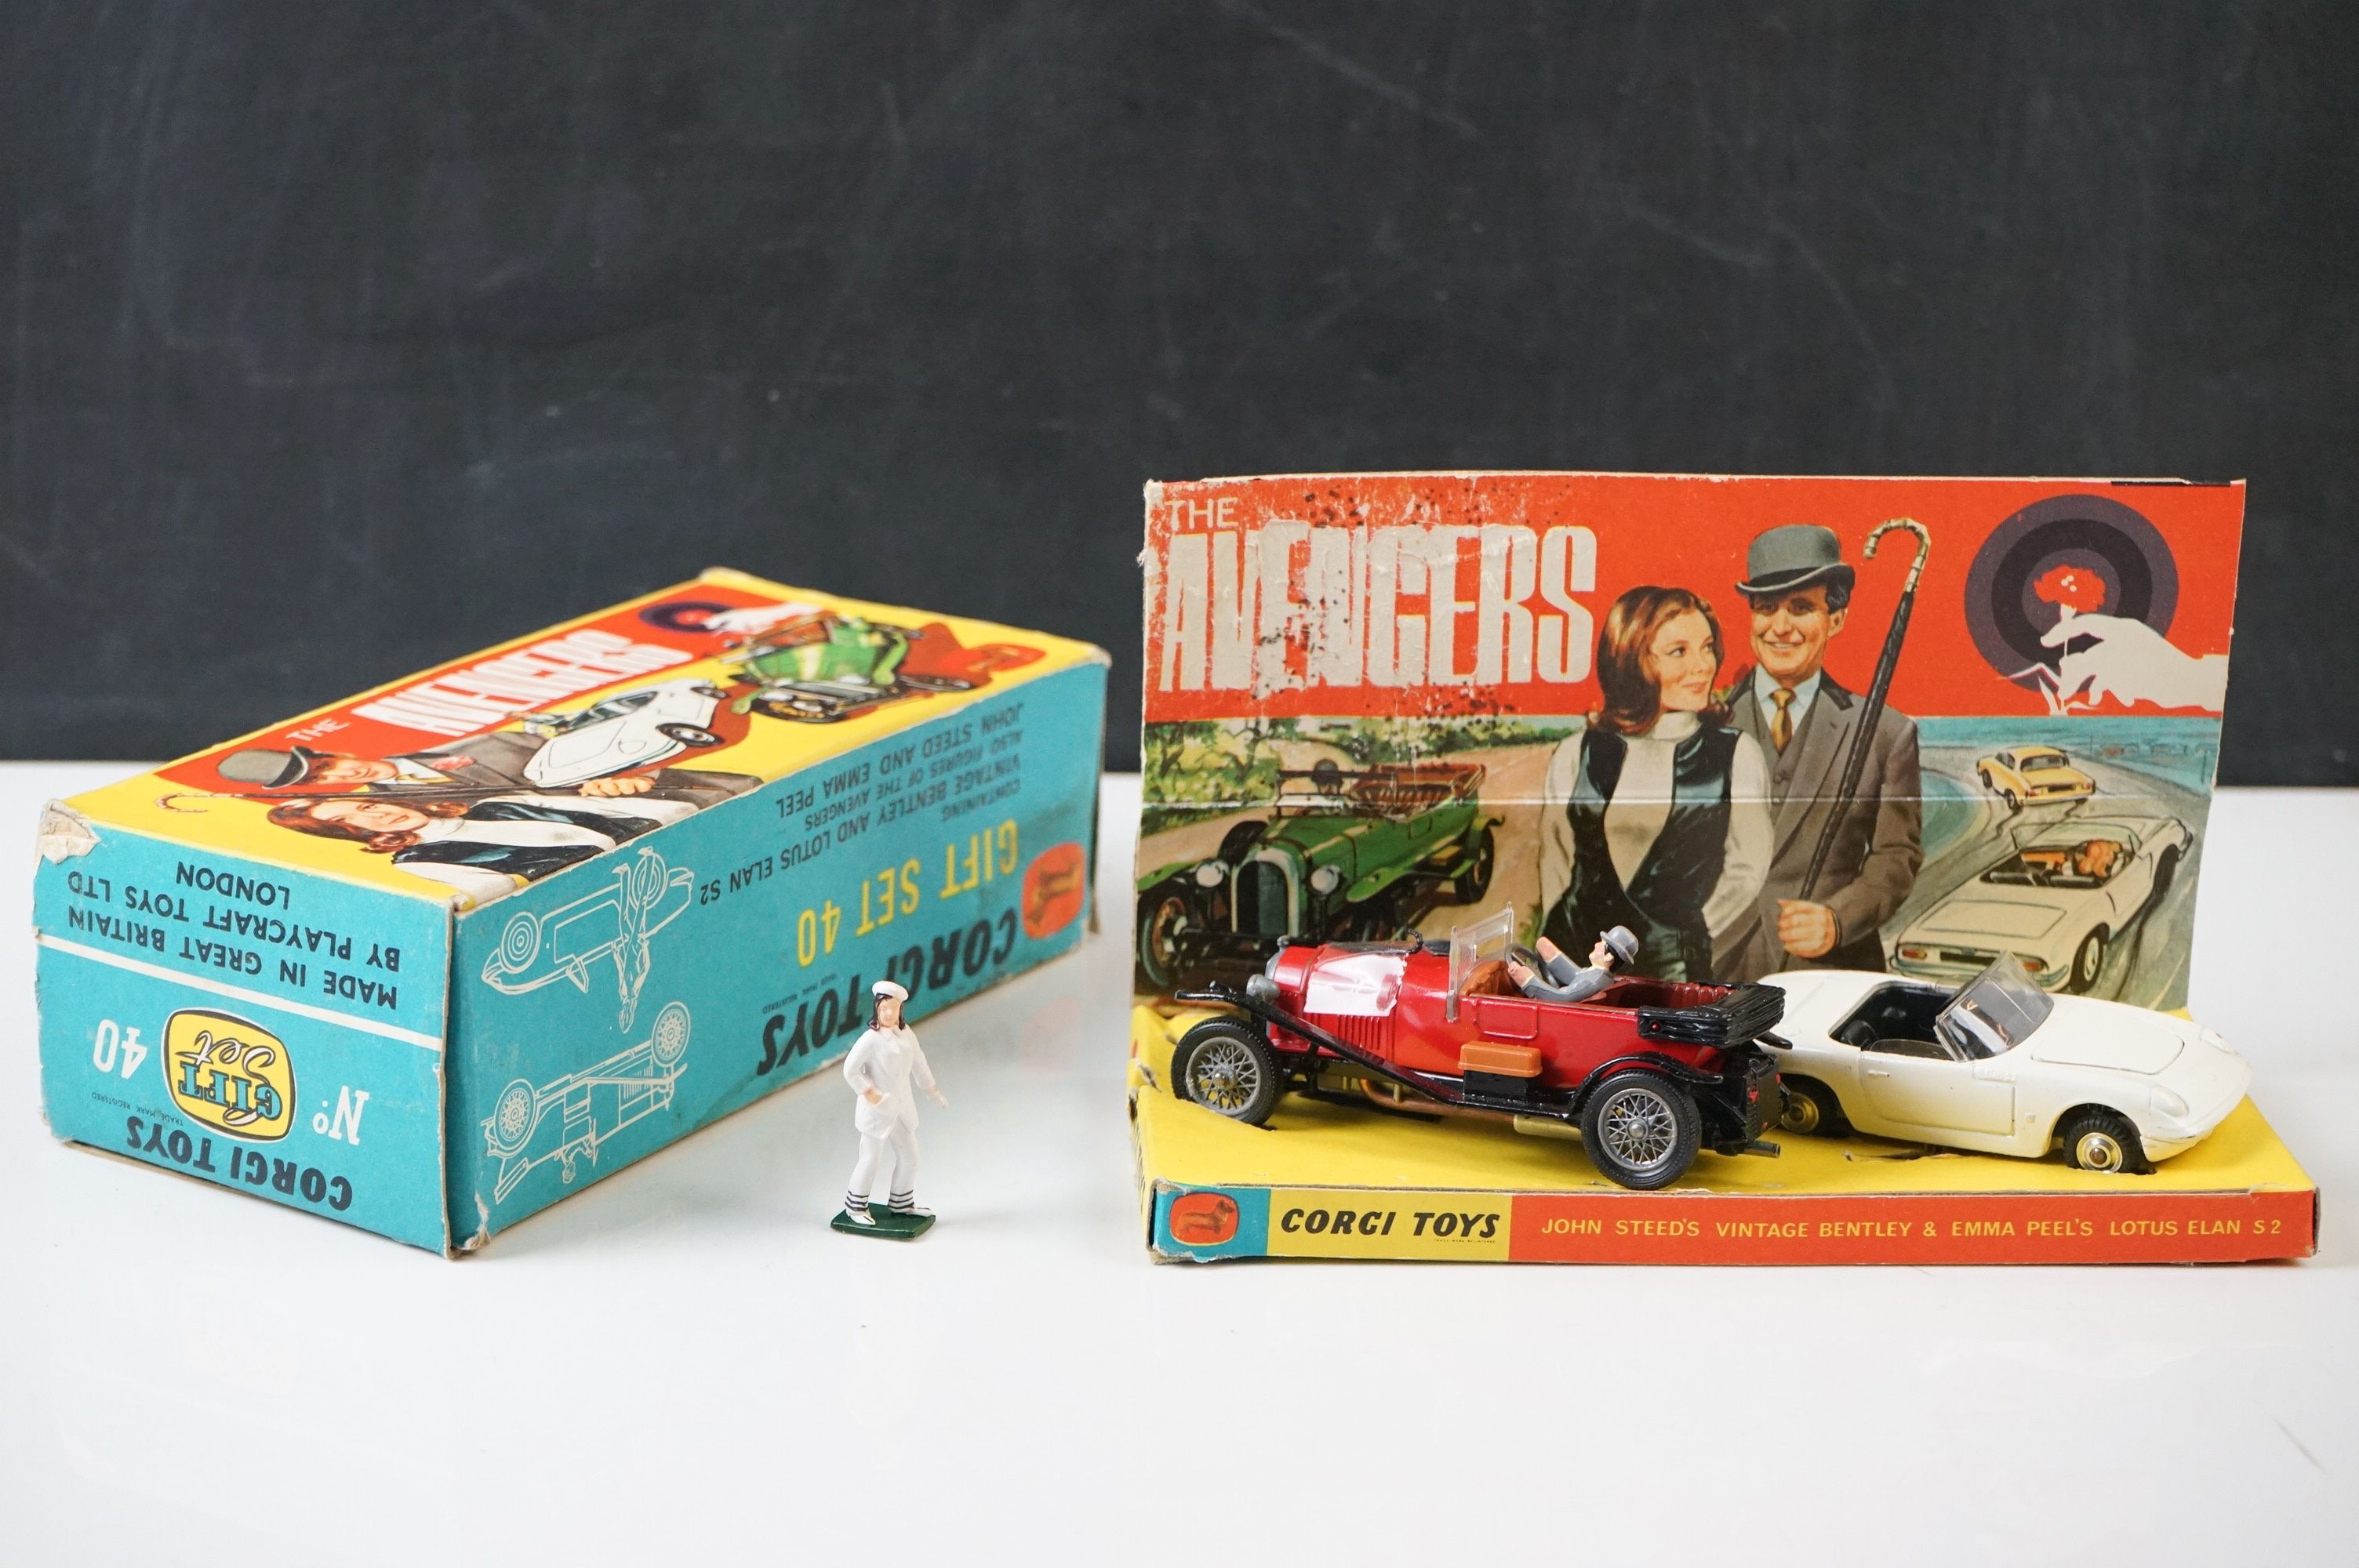 Boxed Corgi Gift Set 40 The Avengers Vintage Bentley and Lotus Elan S2, 2 x figures and 1 x